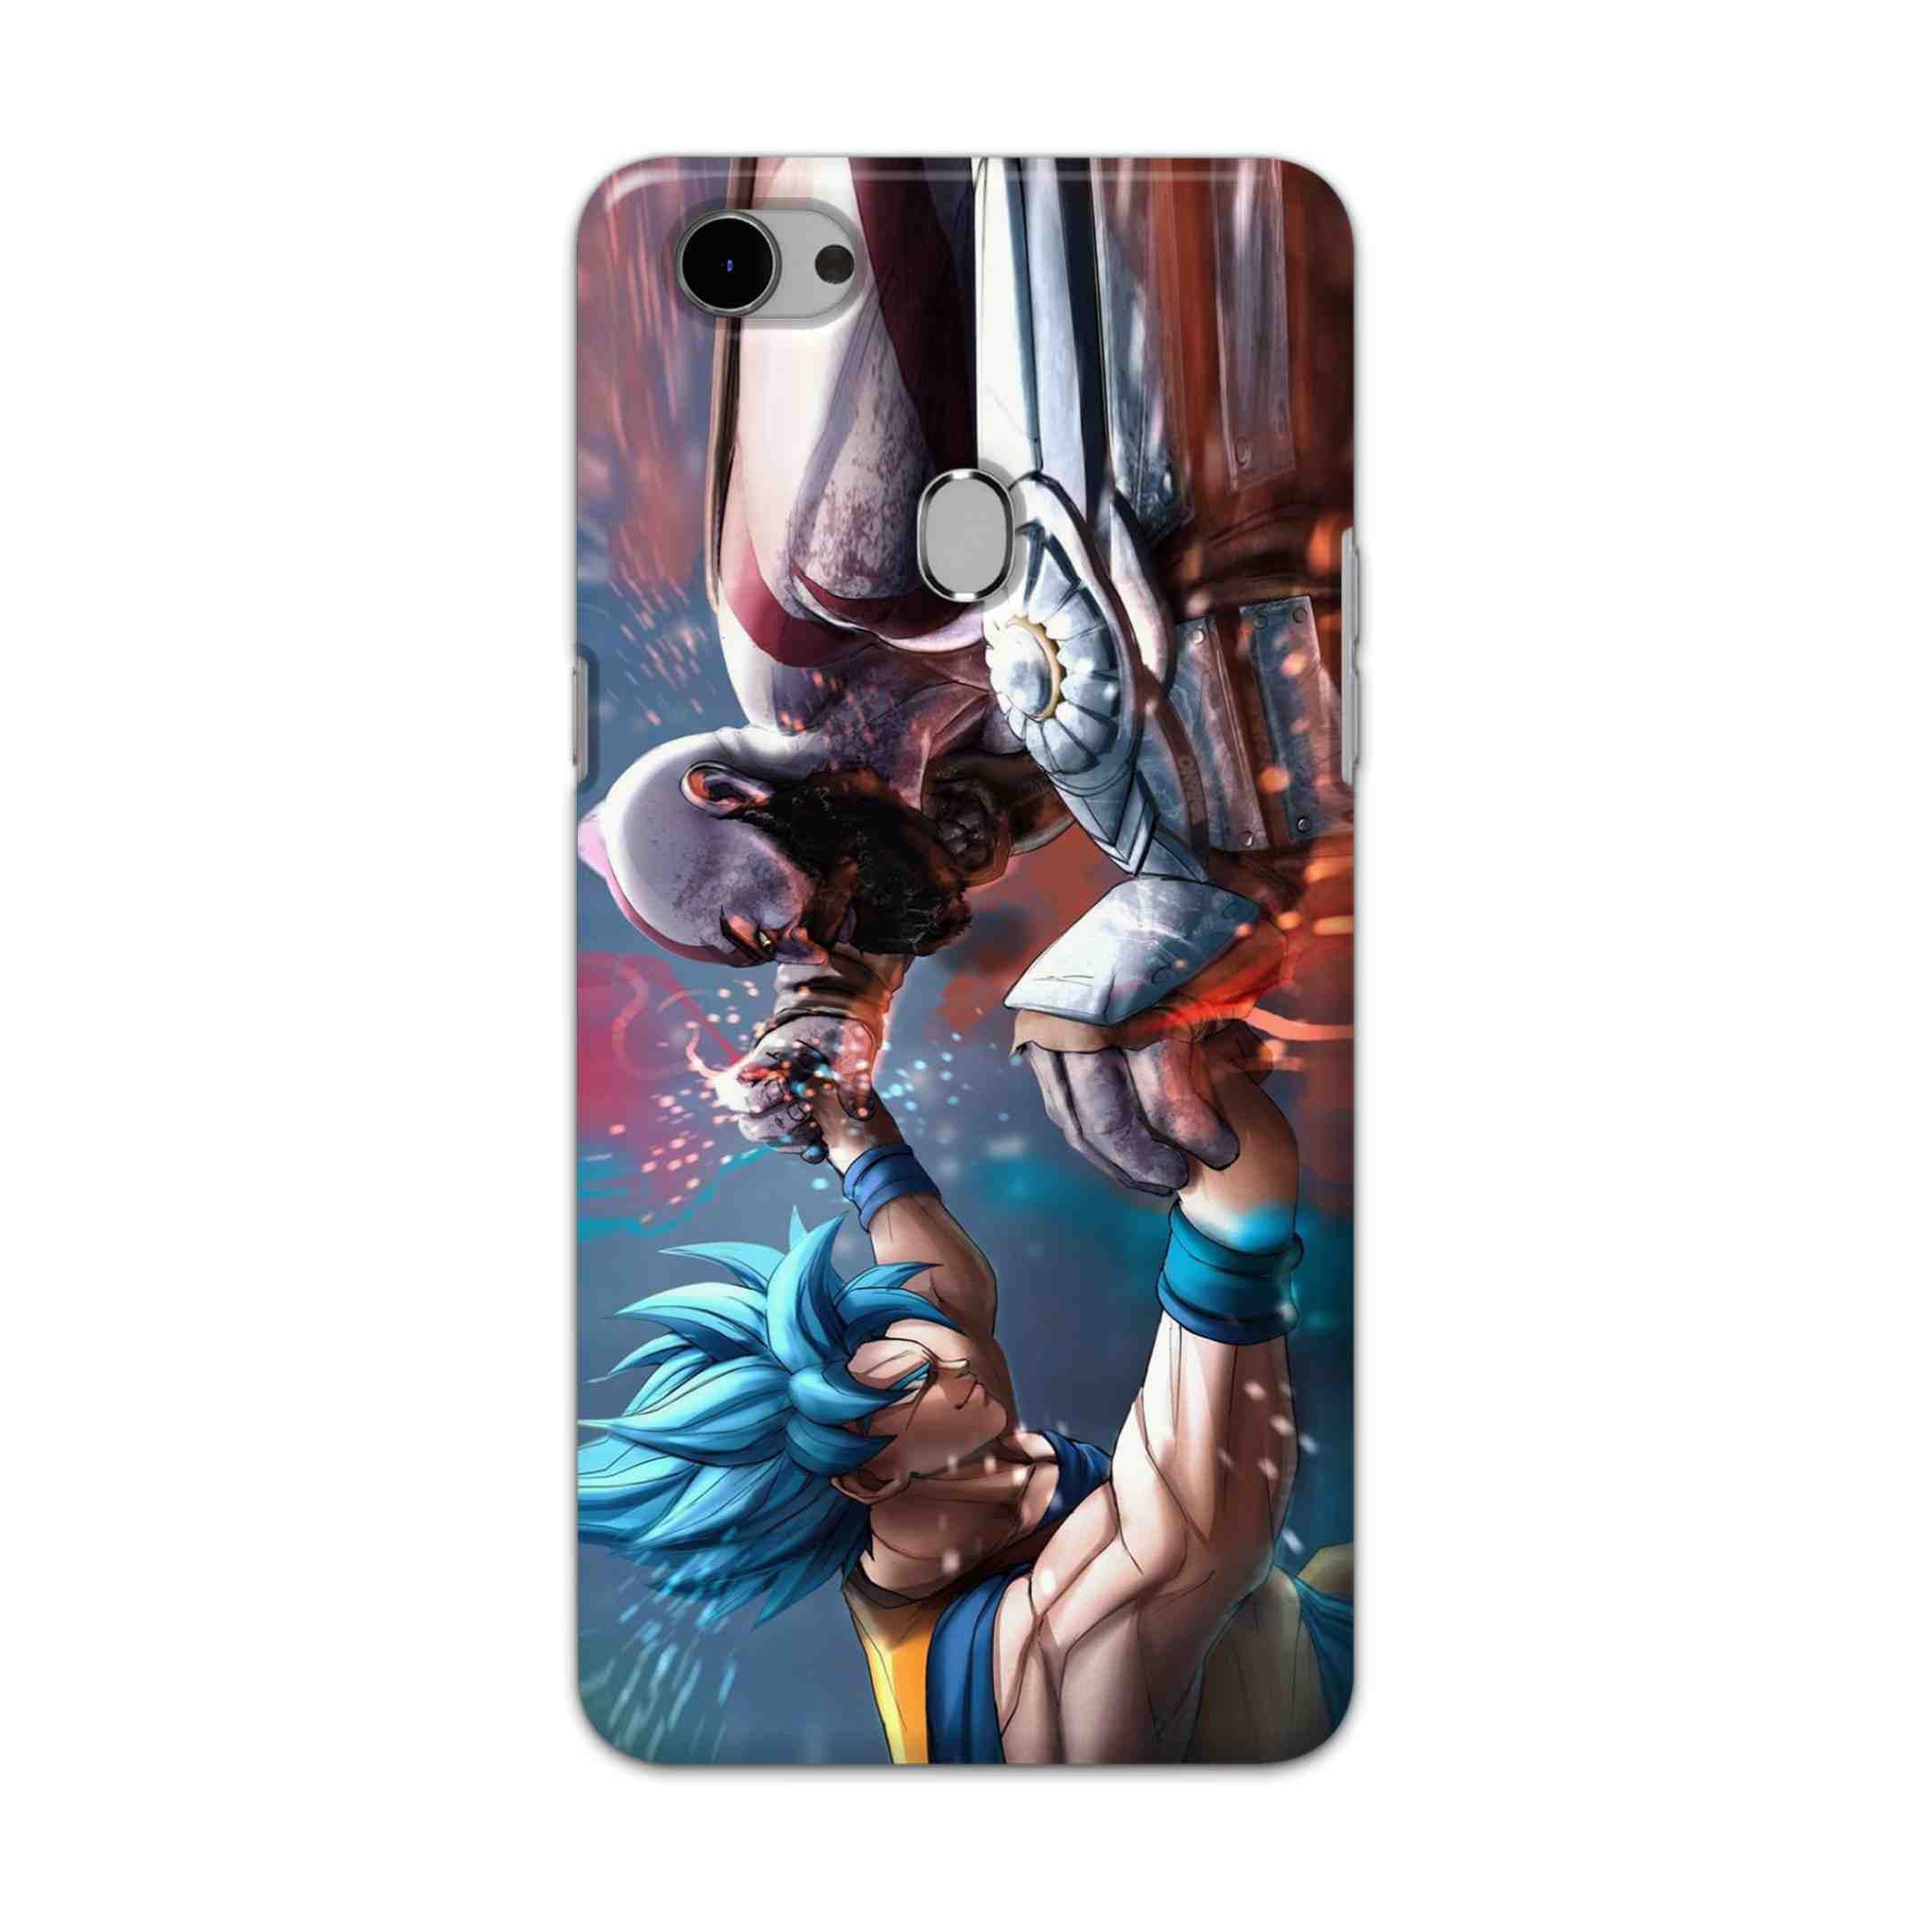 Buy Goku Vs Kratos Hard Back Mobile Phone Case Cover For Oppo F7 Online